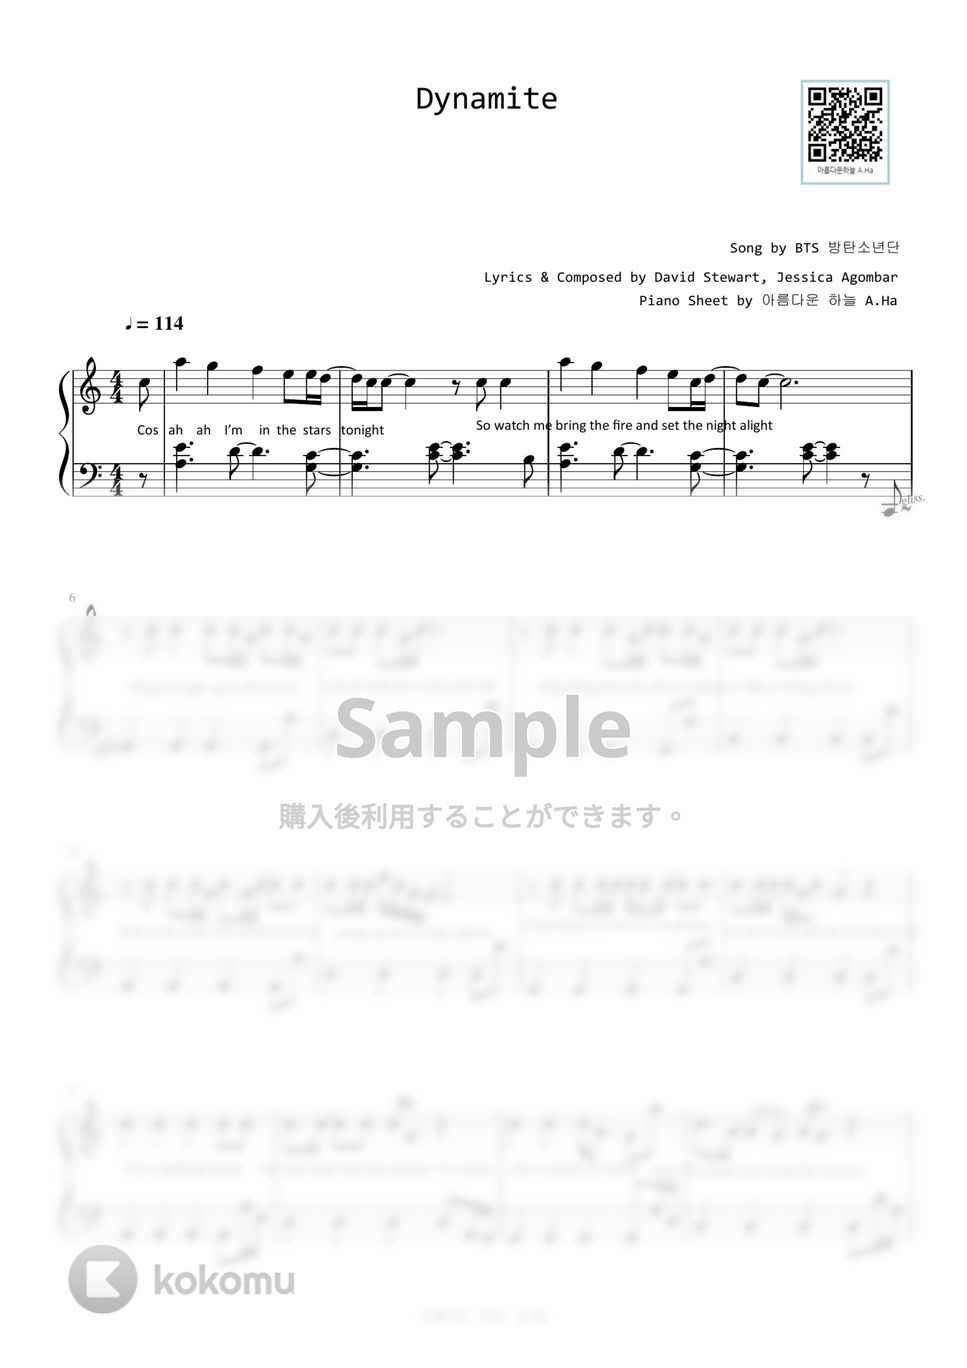 防弾少年団(BTS) - Dynamite (Level 3 - C Key) by A.Ha